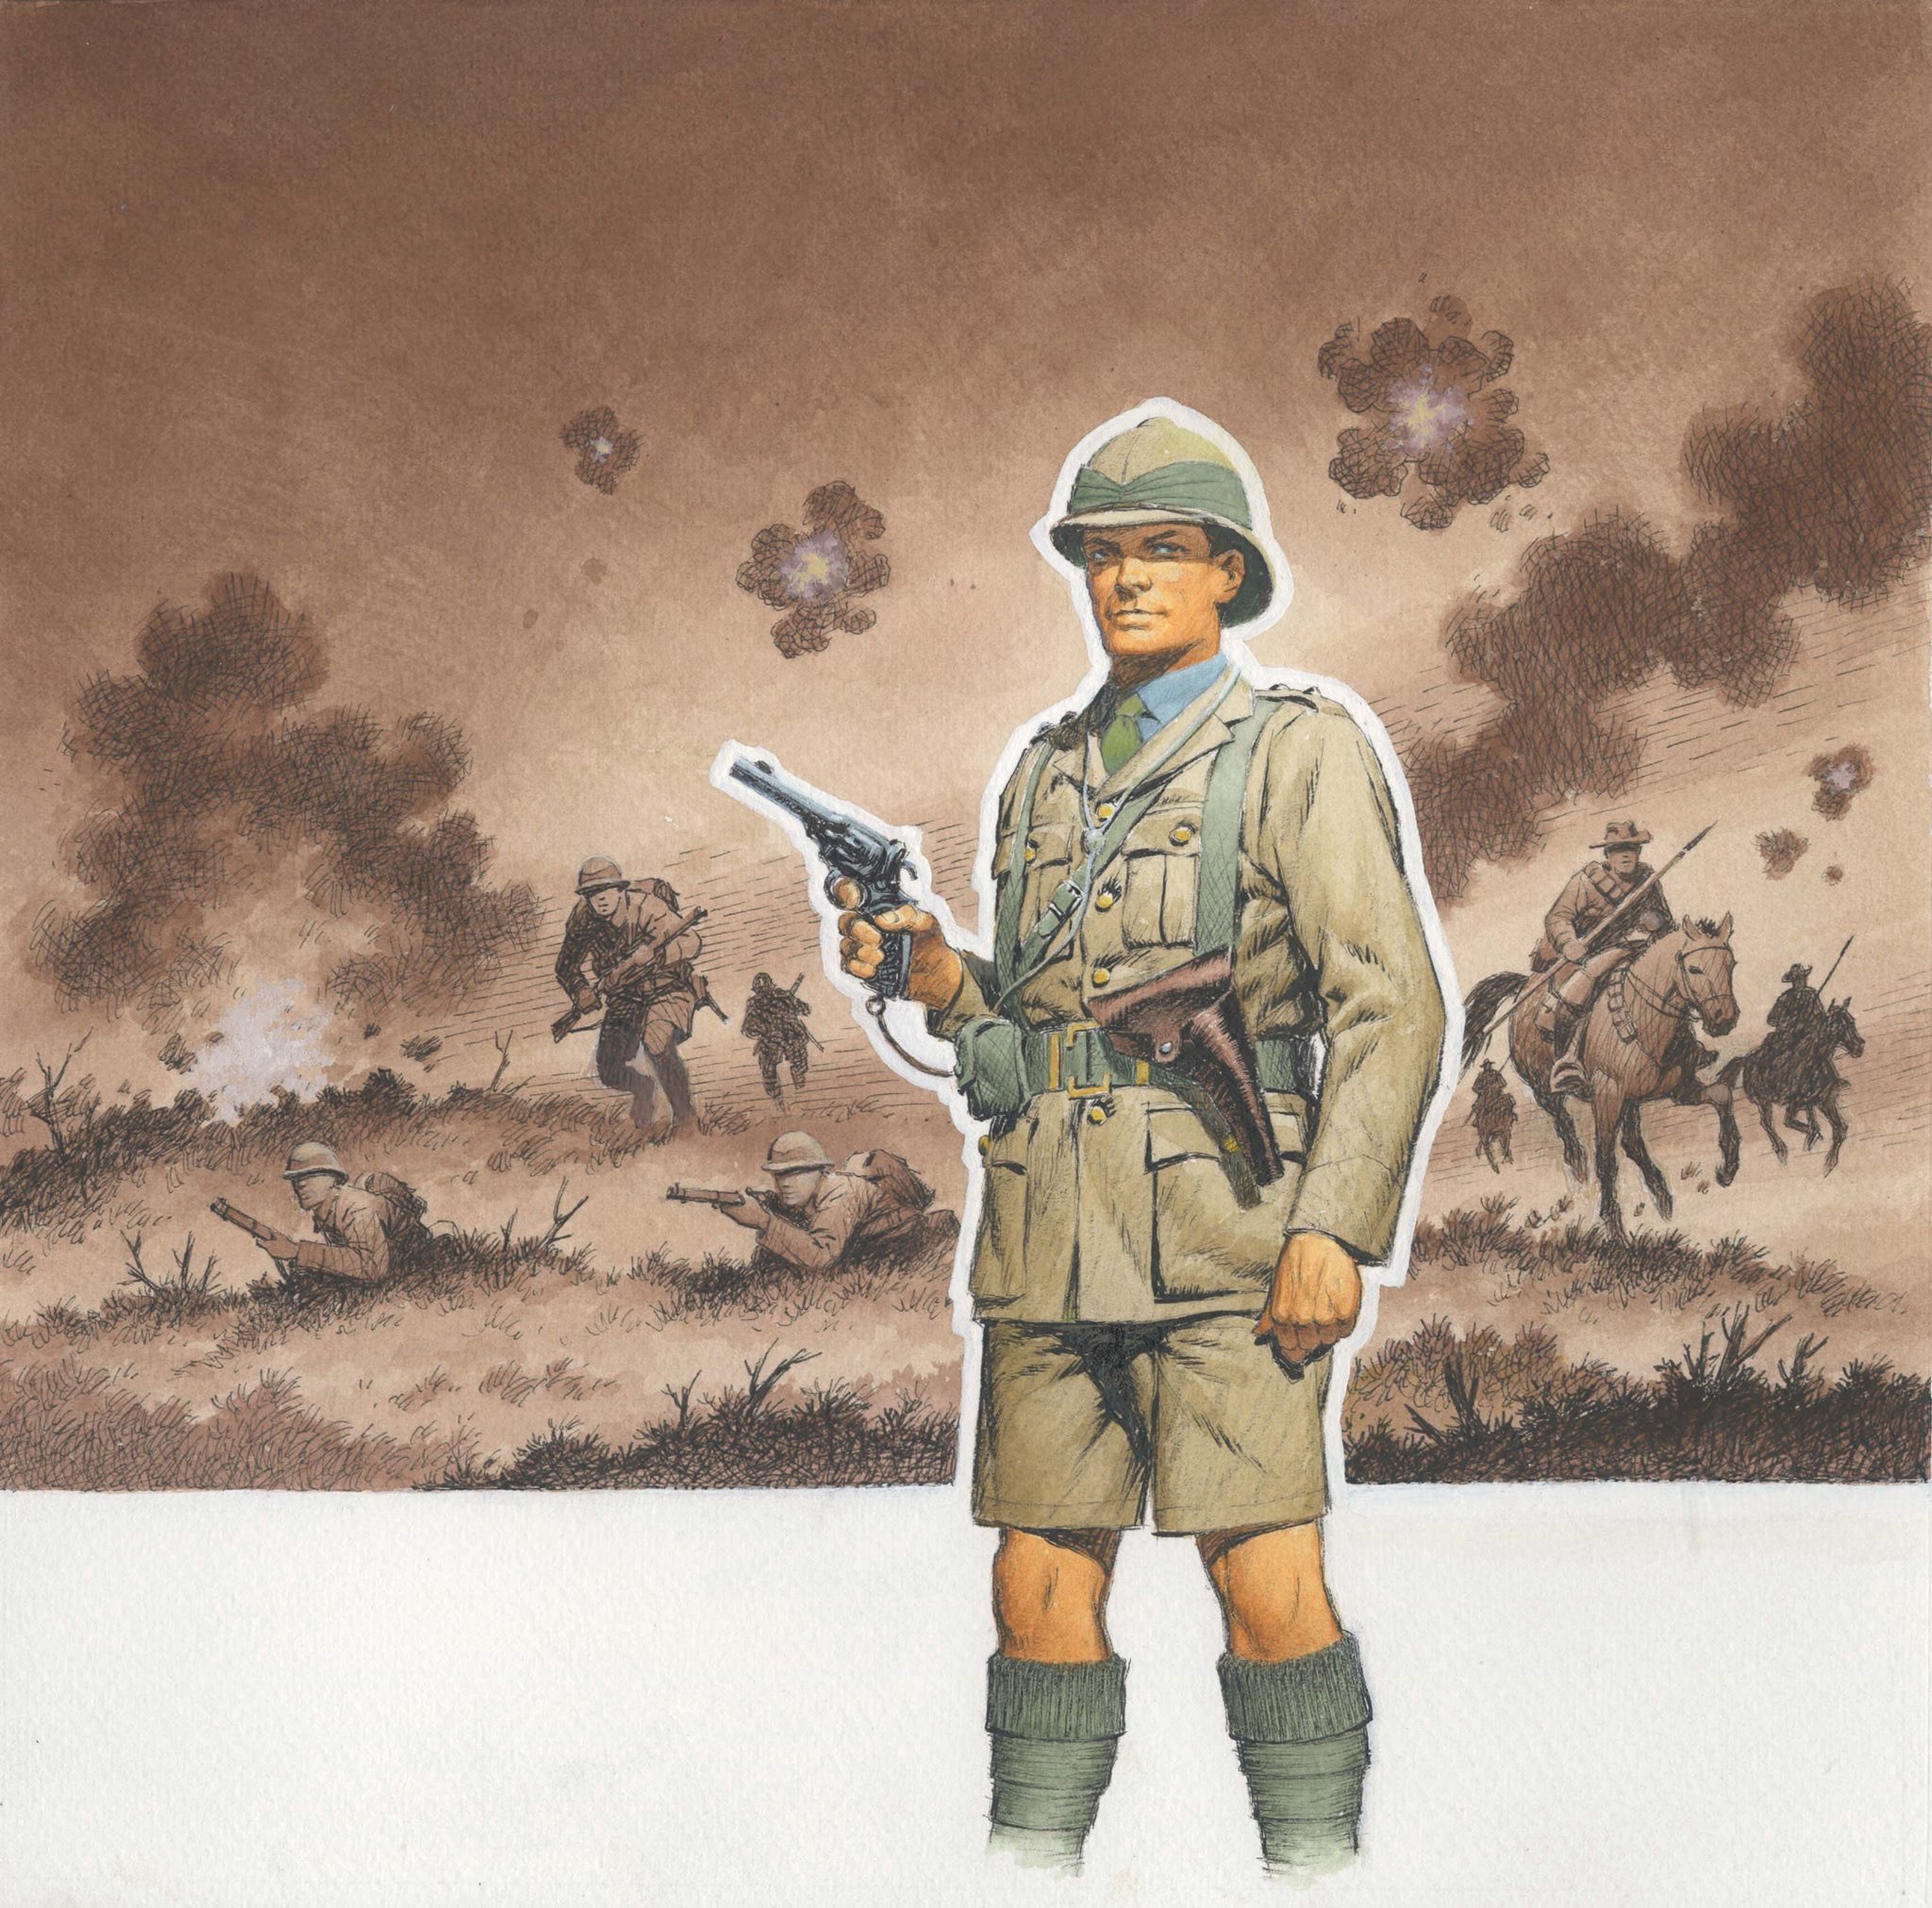 Commando 4739 - 'Attack on Arabia' cover art by Ian Kennedy